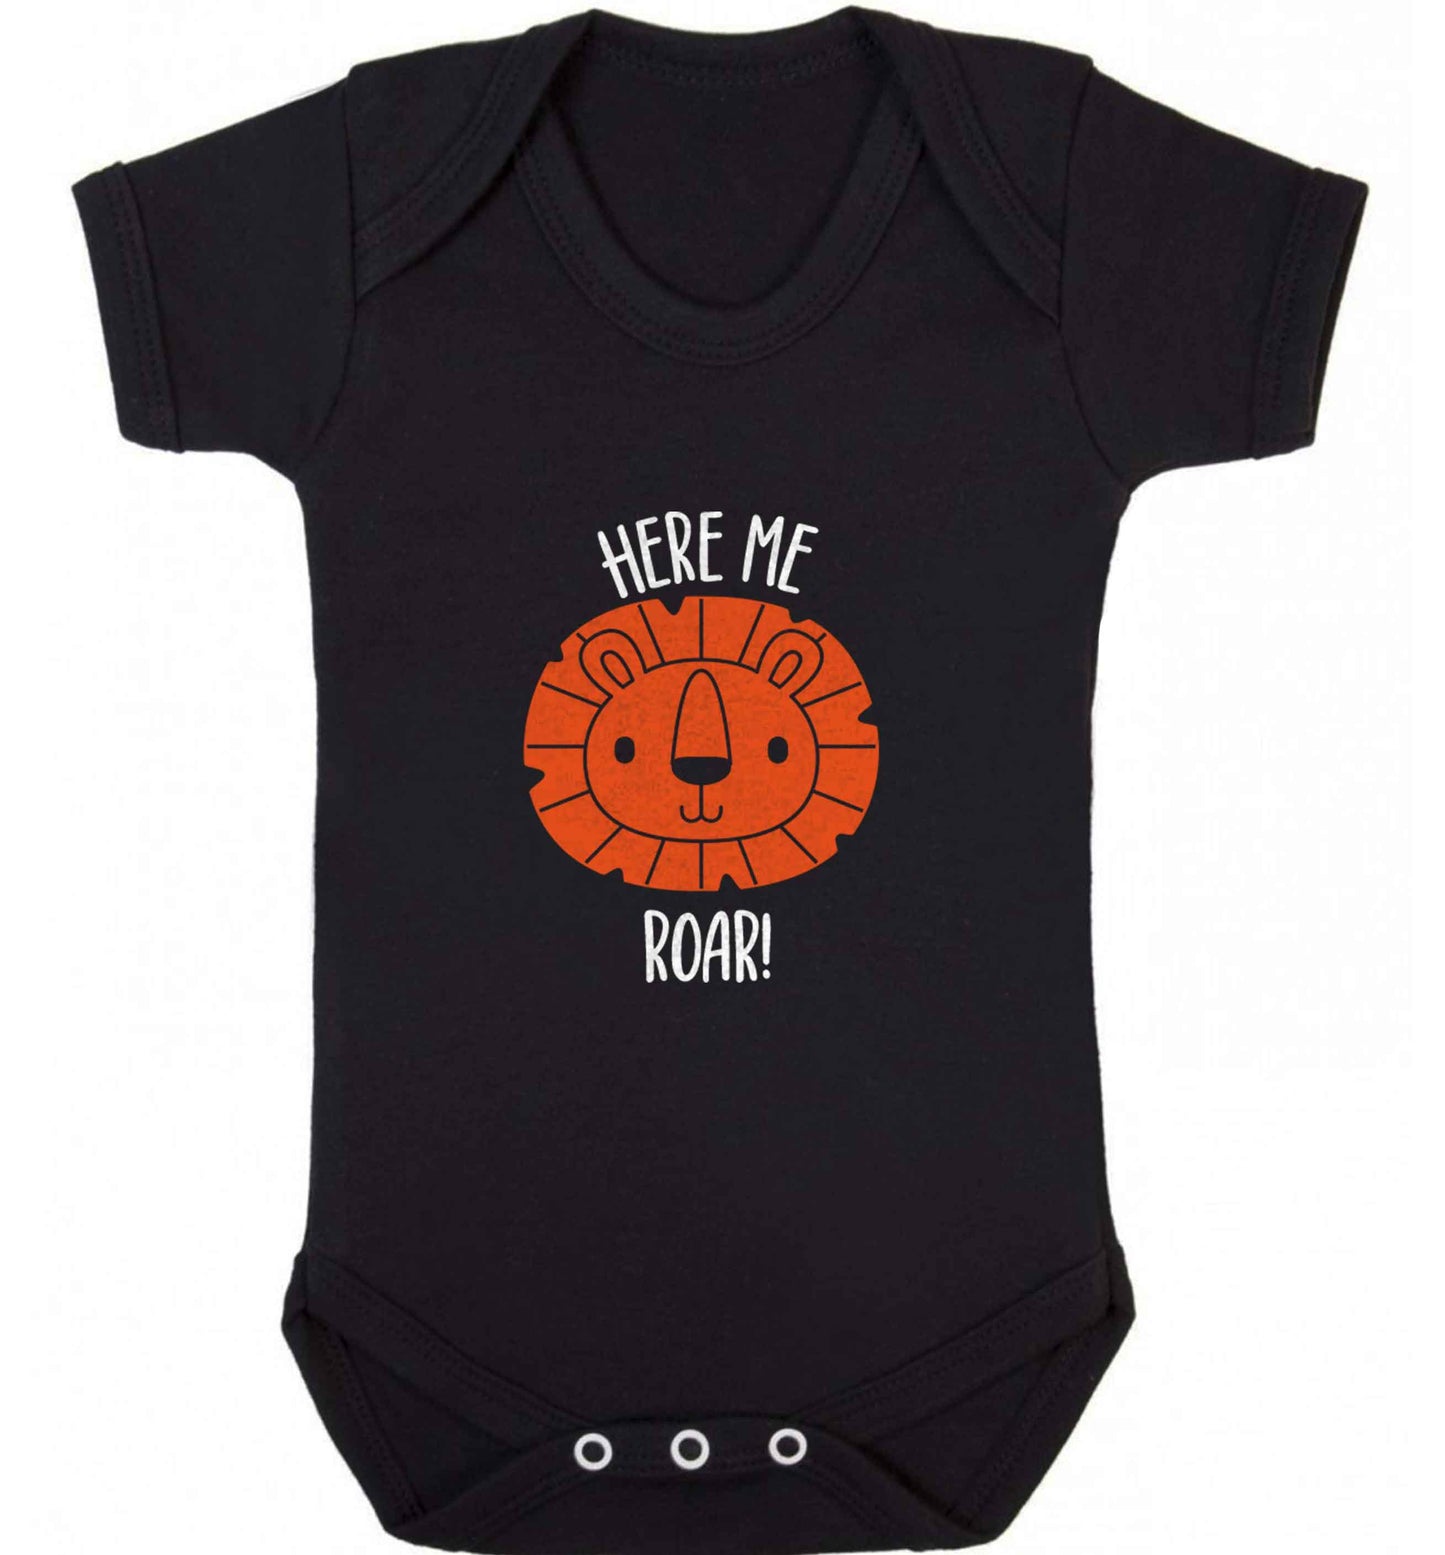 Hear me roar baby vest black 18-24 months